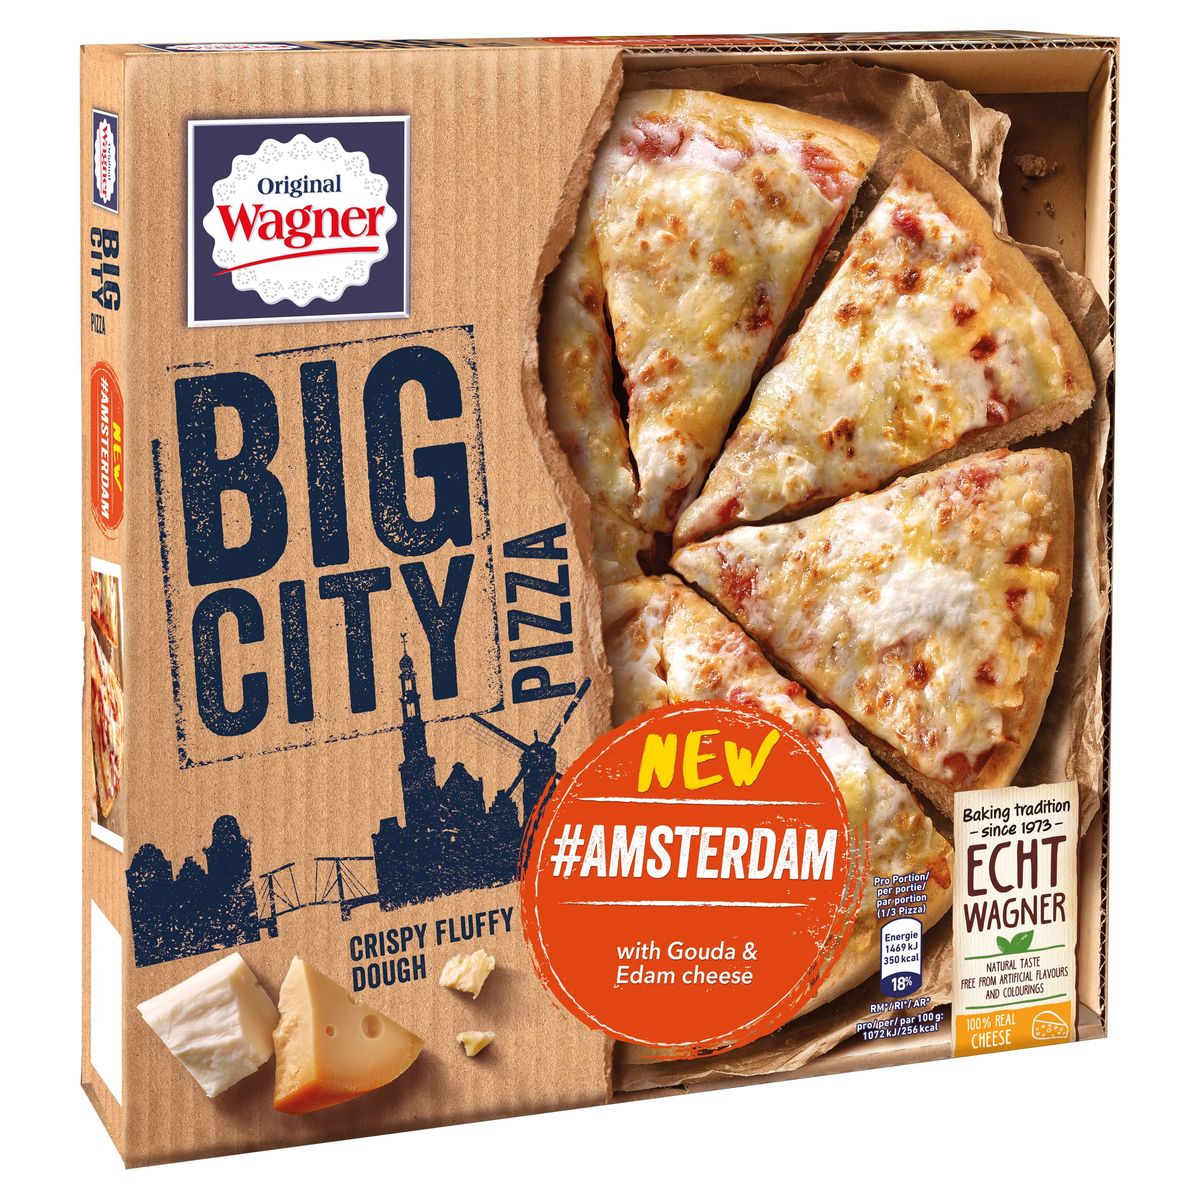 Original Wagner Big City Pizza with Mozzarella & Edam Cheese 410 g